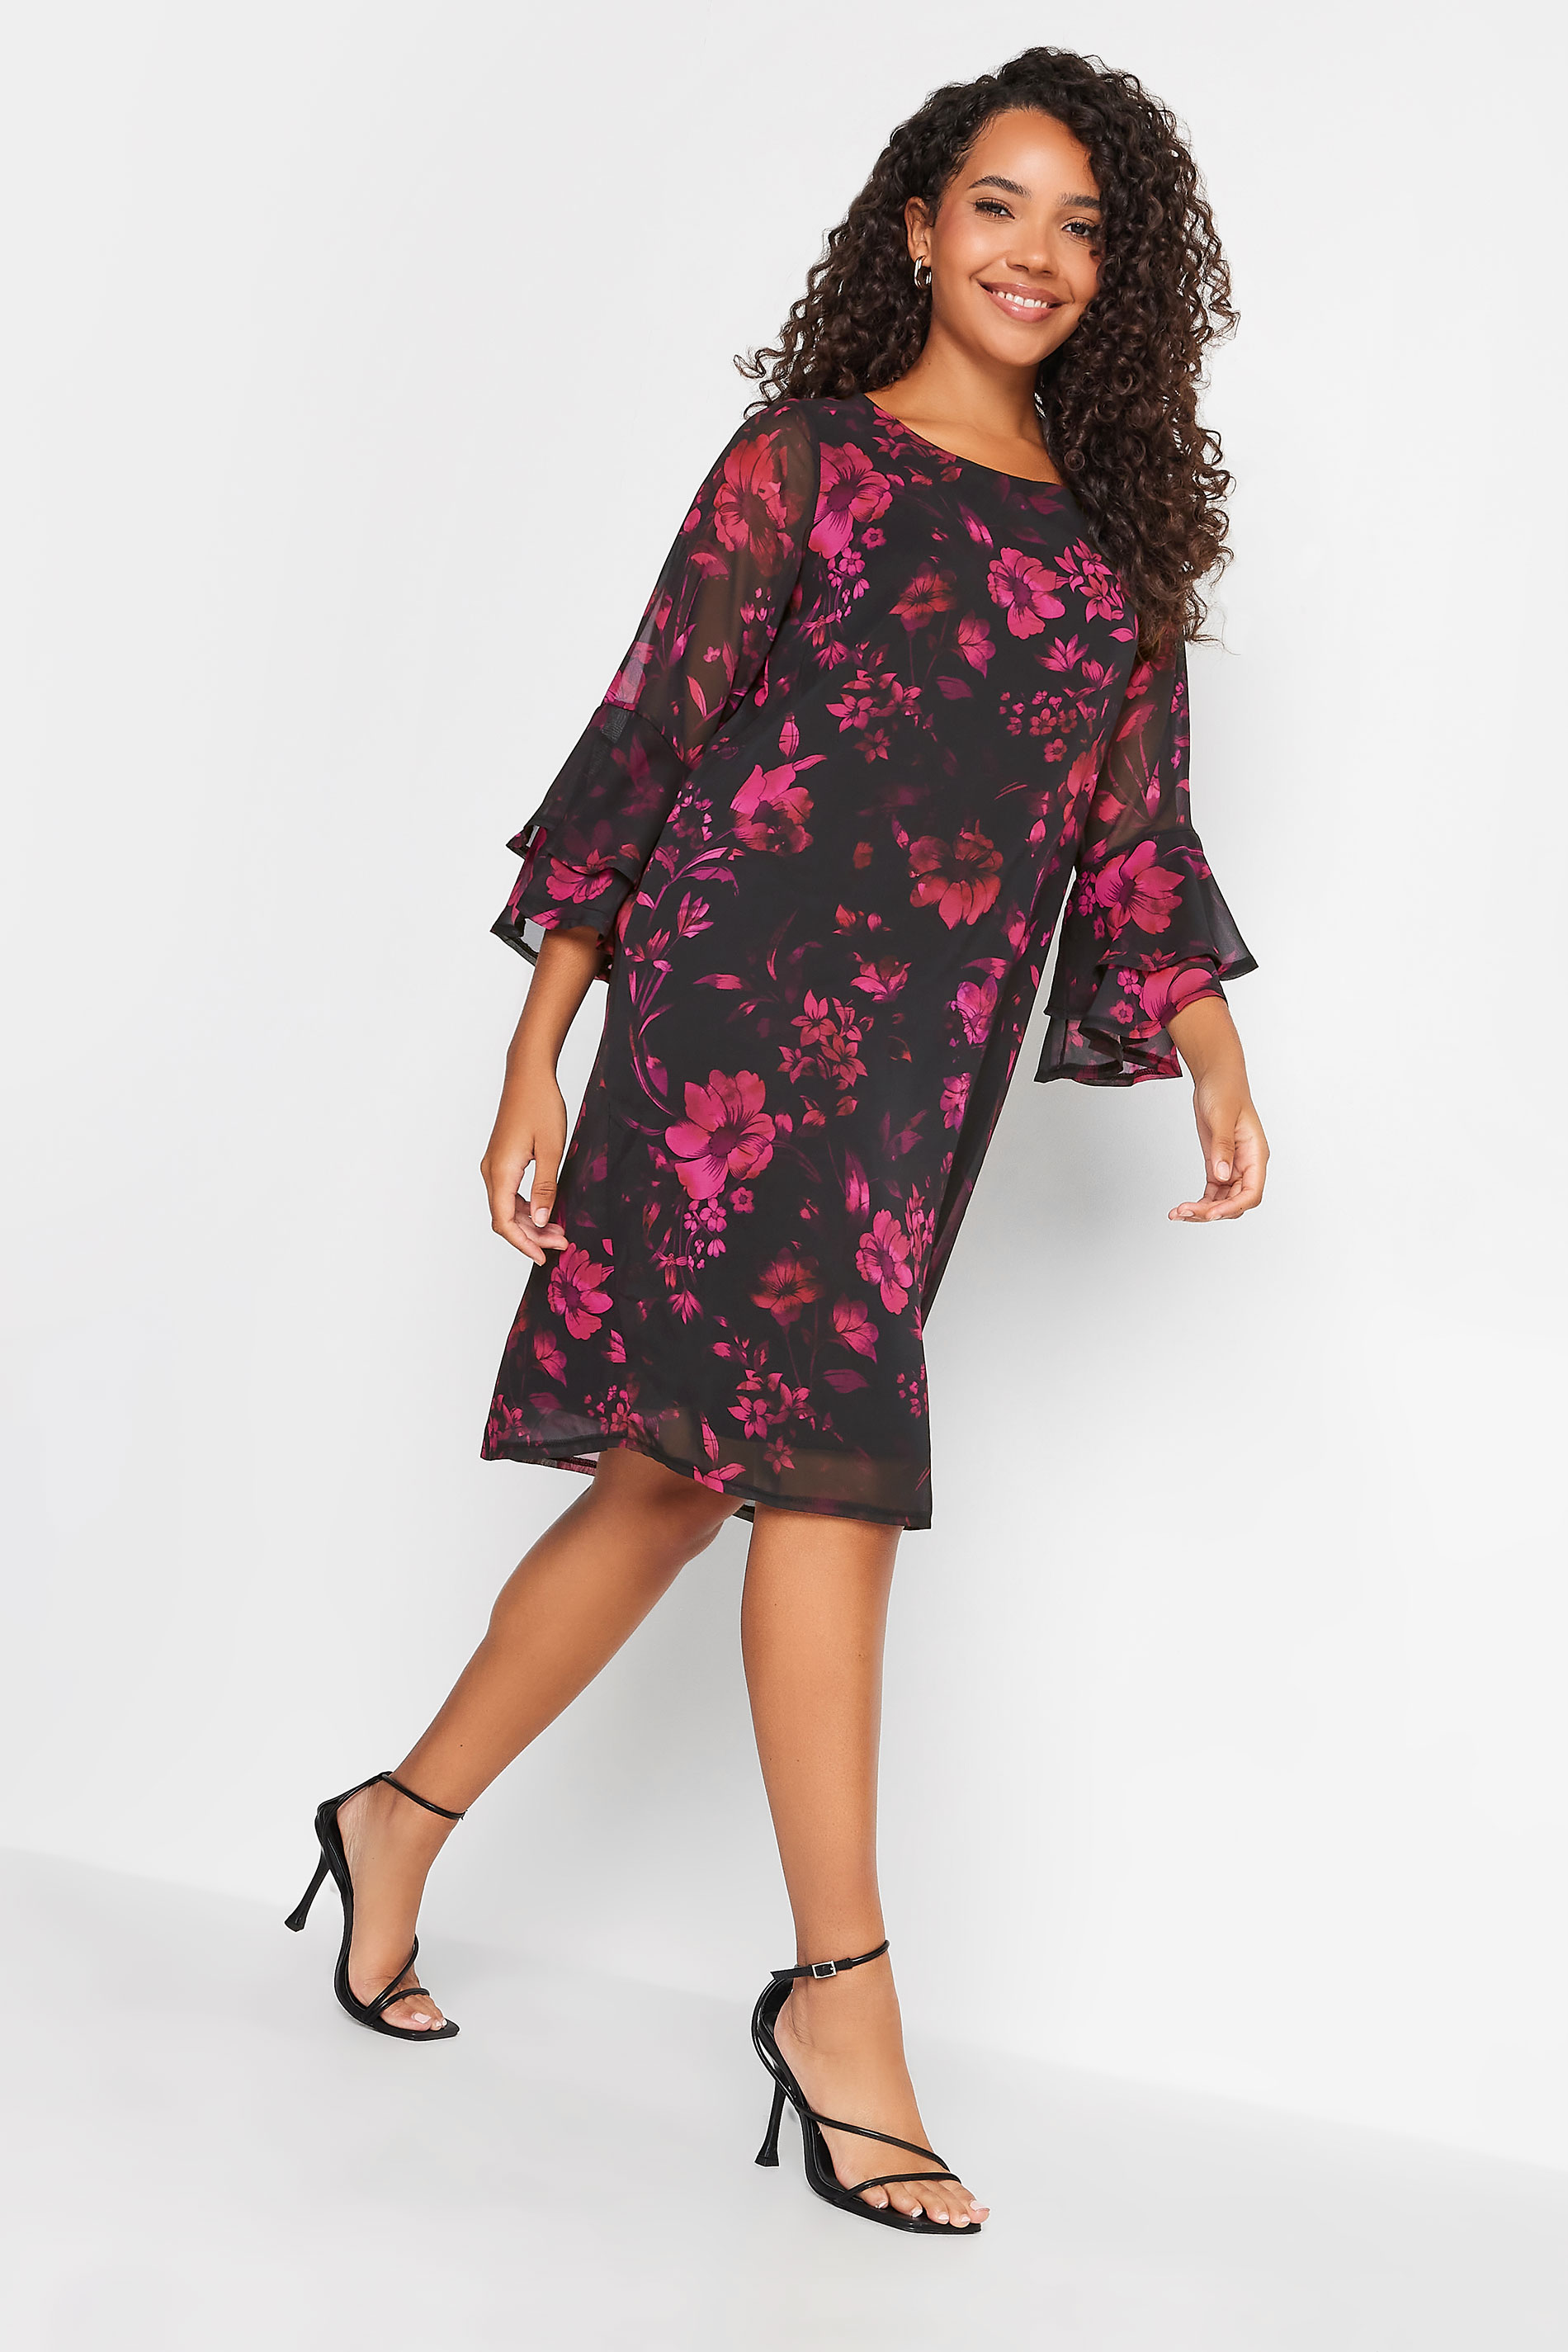 M&Co Black Floral Print Flute Sleeve Shift Dress | M&Co 3